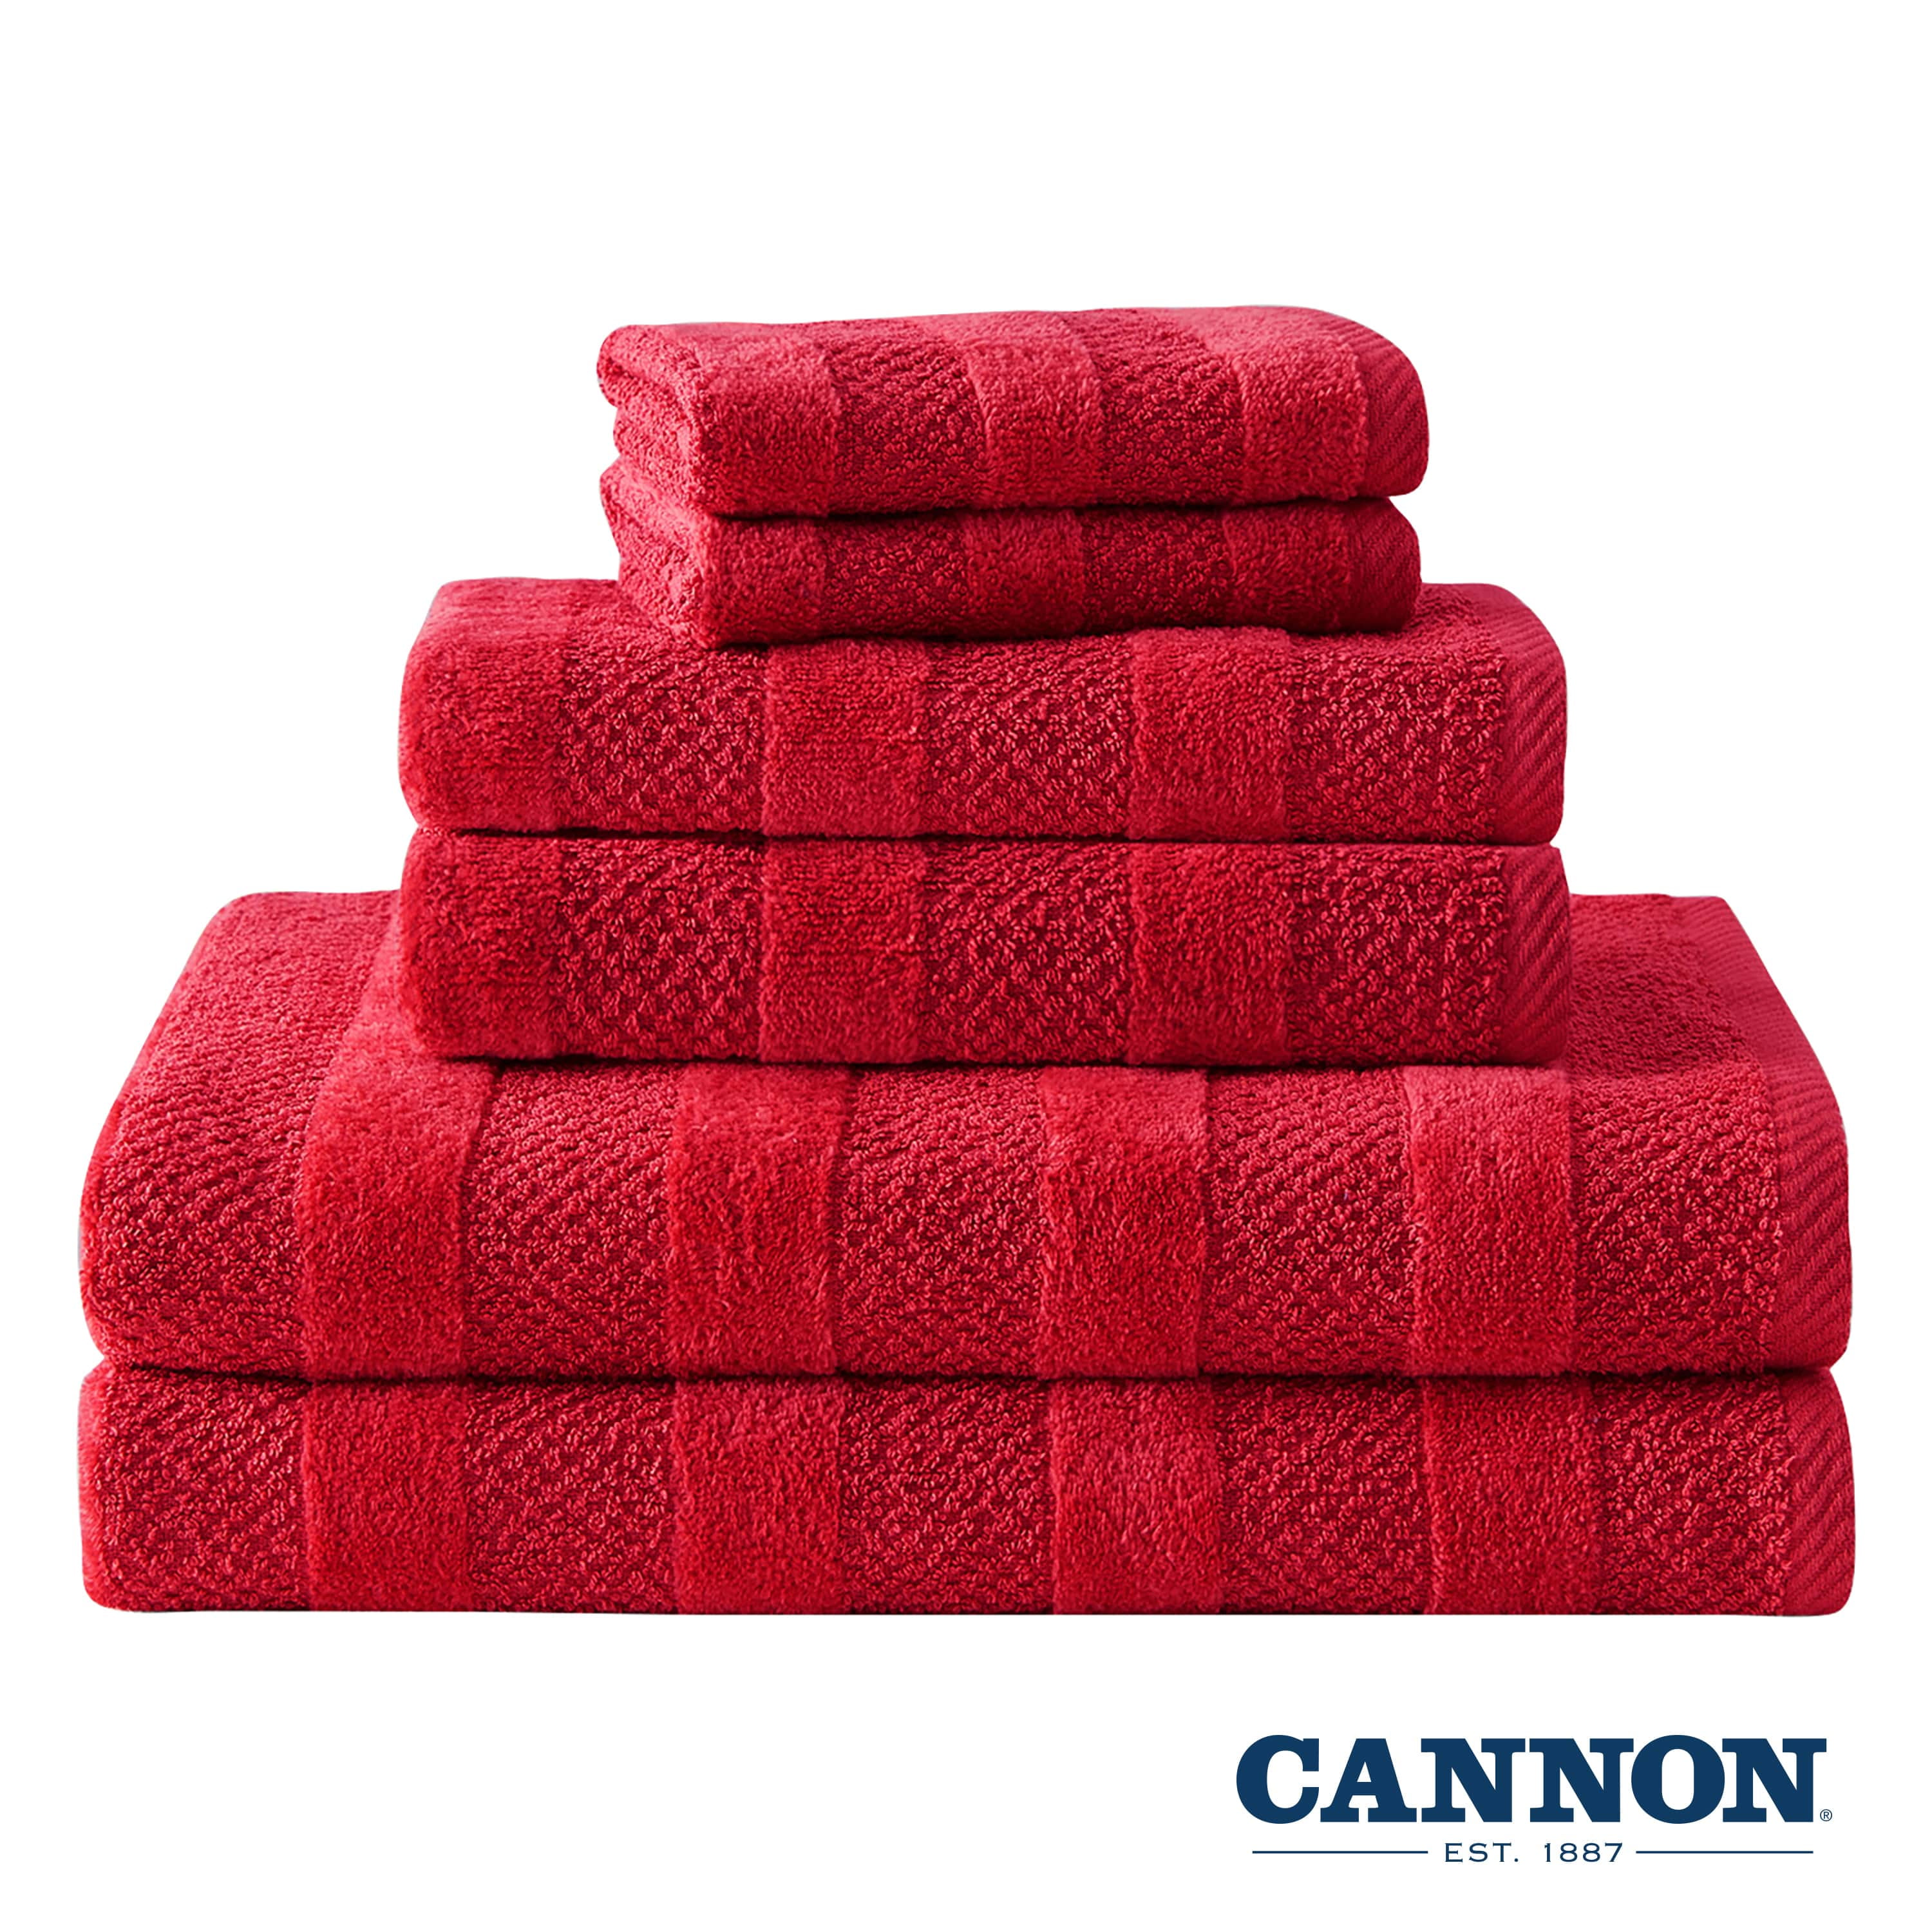 Wayfair  Cannon Bath Towel Sets You'll Love in 2023